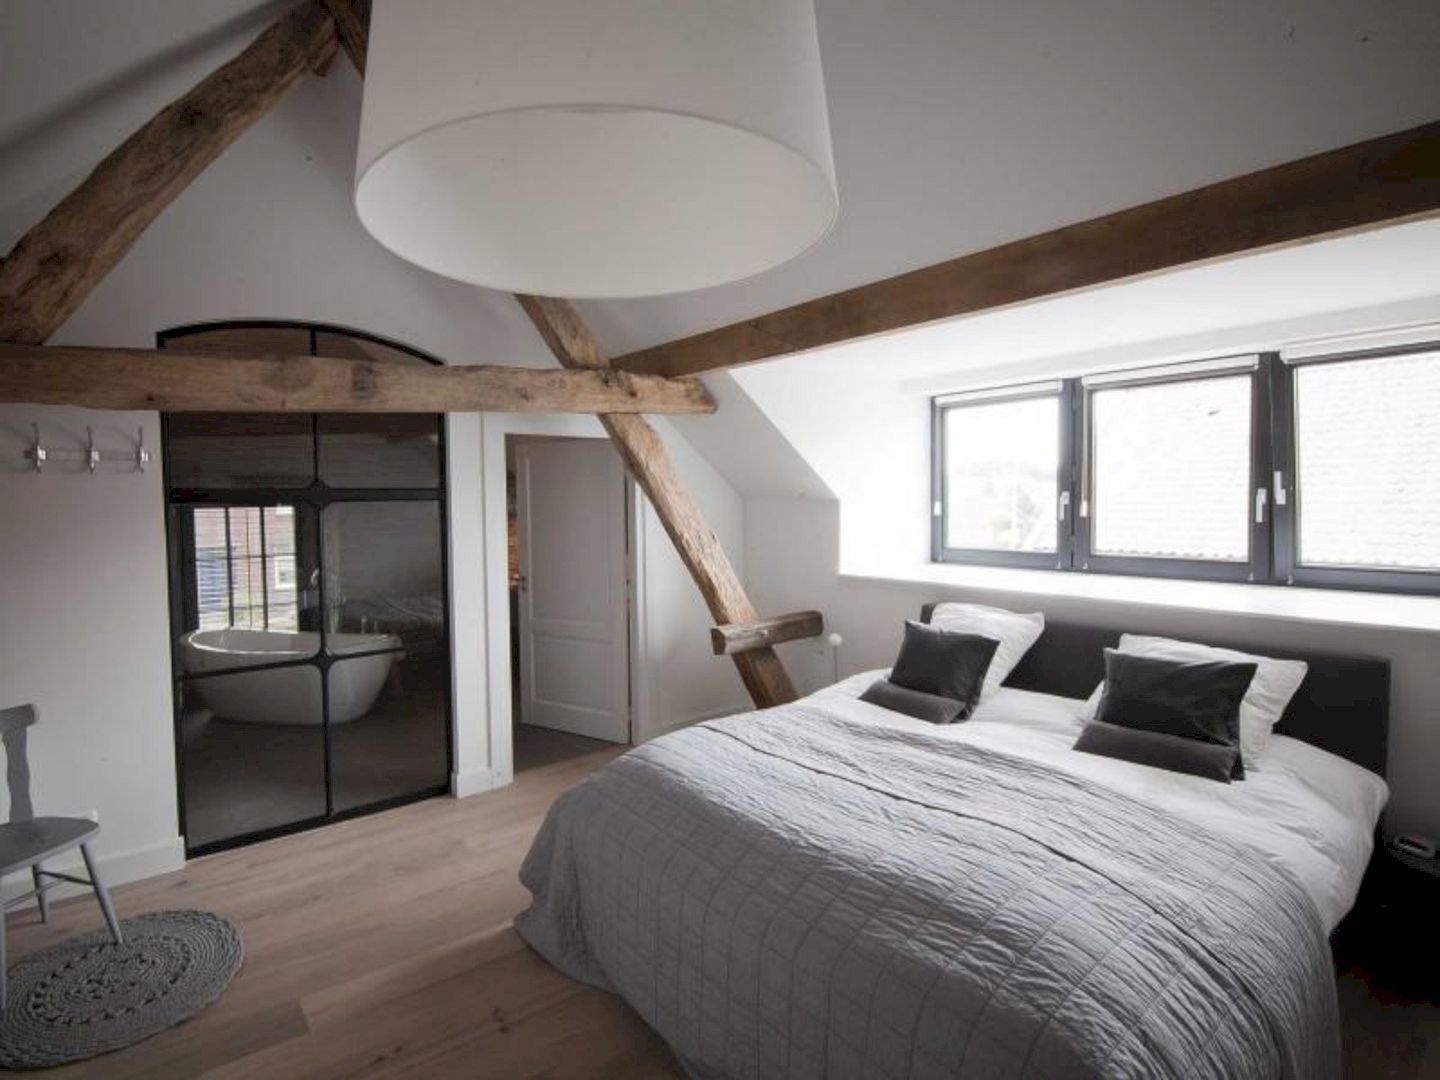 bedroom, wooden floor, white wall, vaulted ceiling, black bed platform, wooden beams